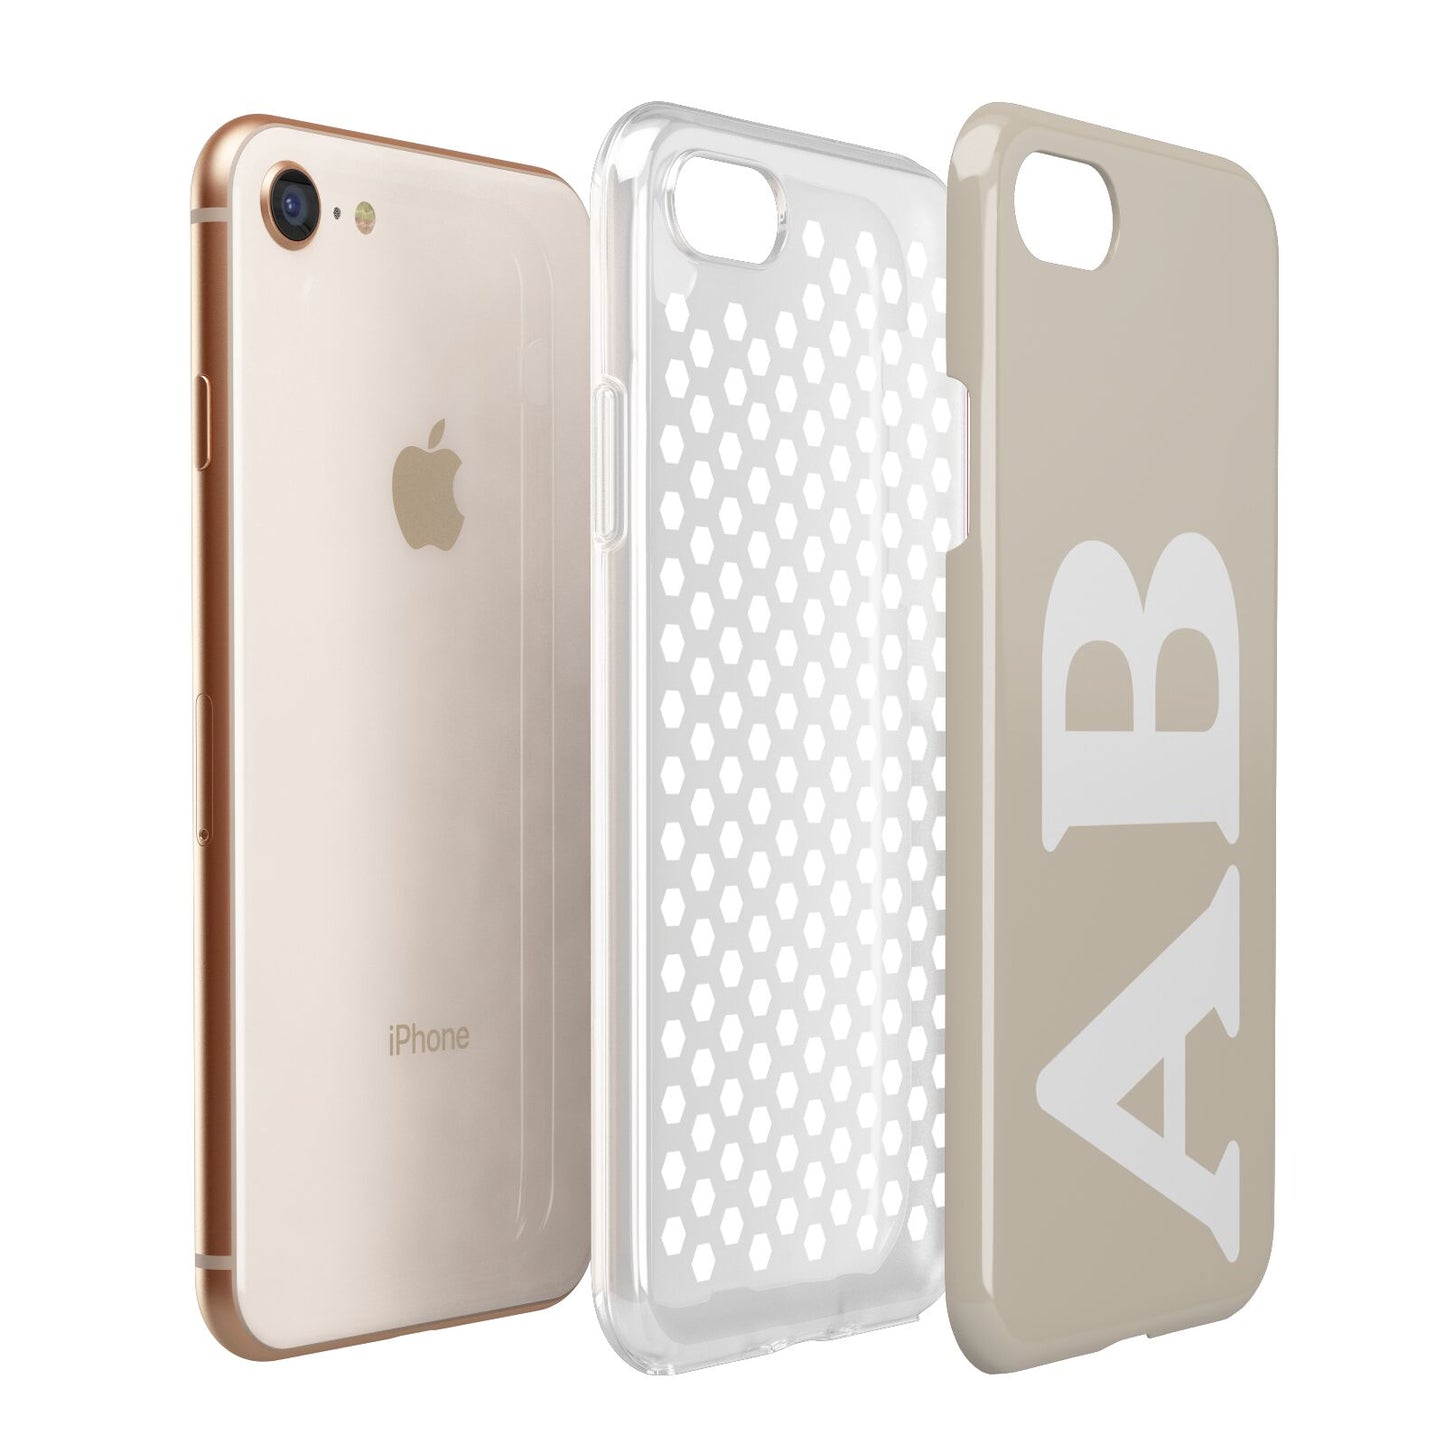 Initials Apple iPhone 7 8 3D Tough Case Expanded View